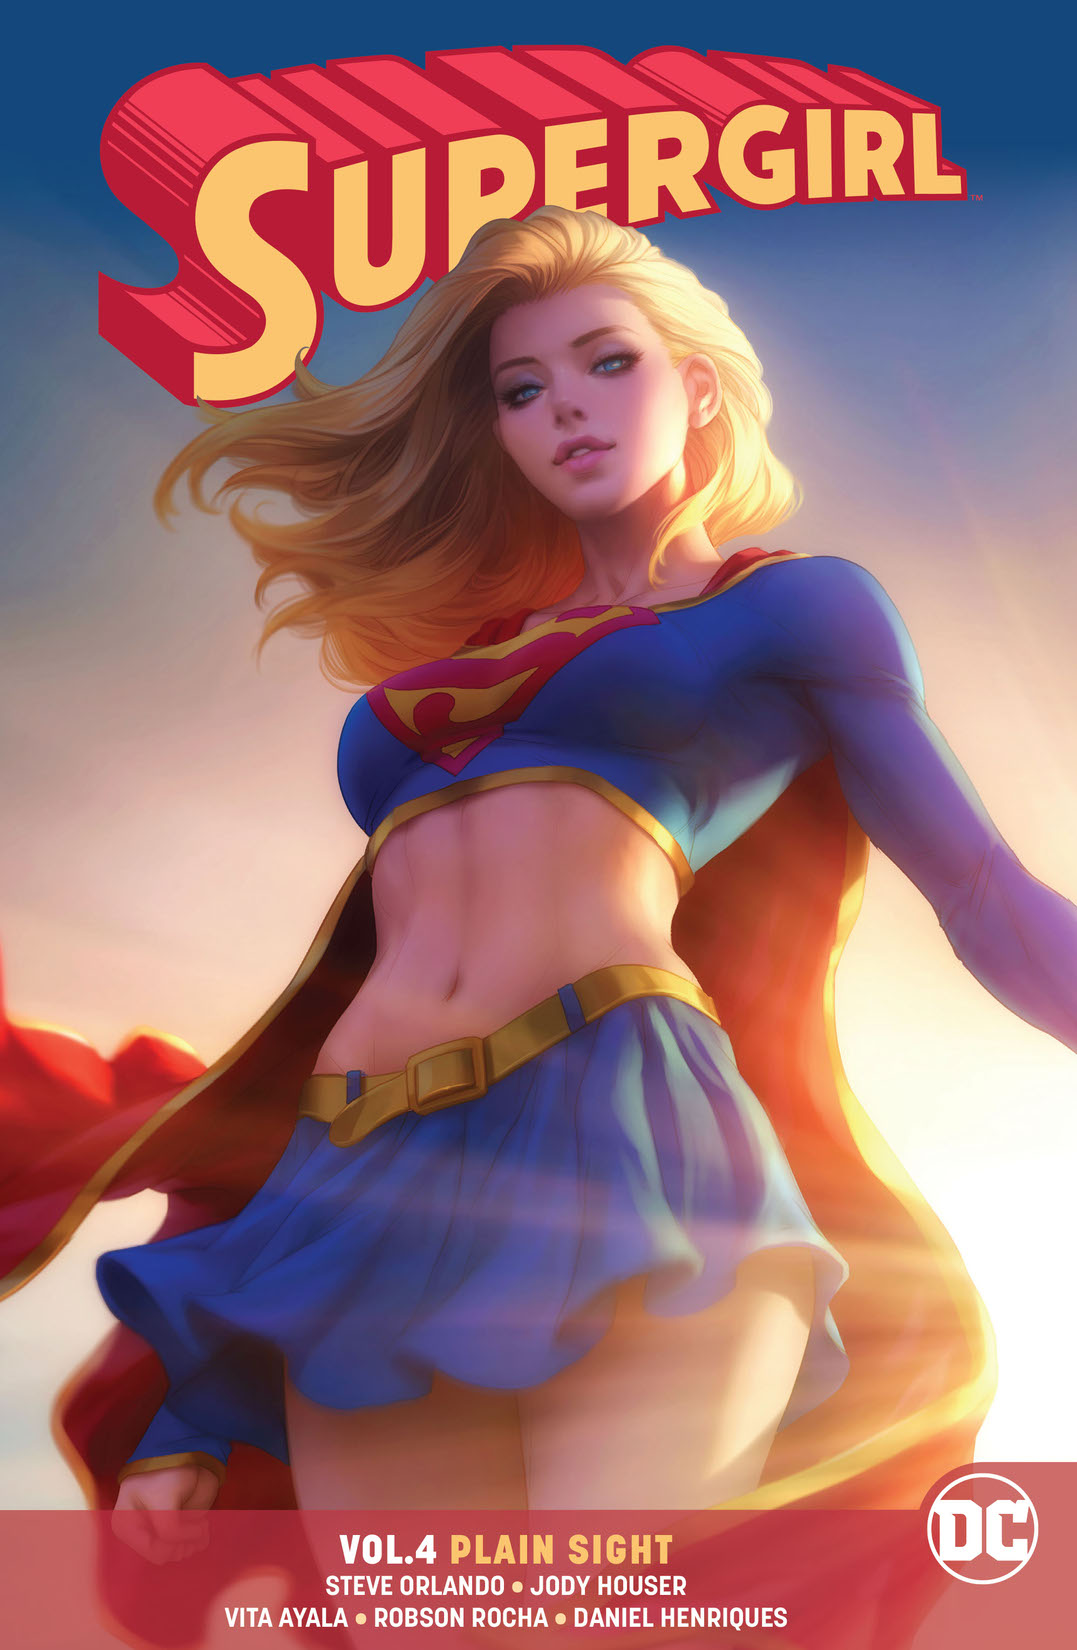 Supergirl Vol. 4: Plain Sight preview images